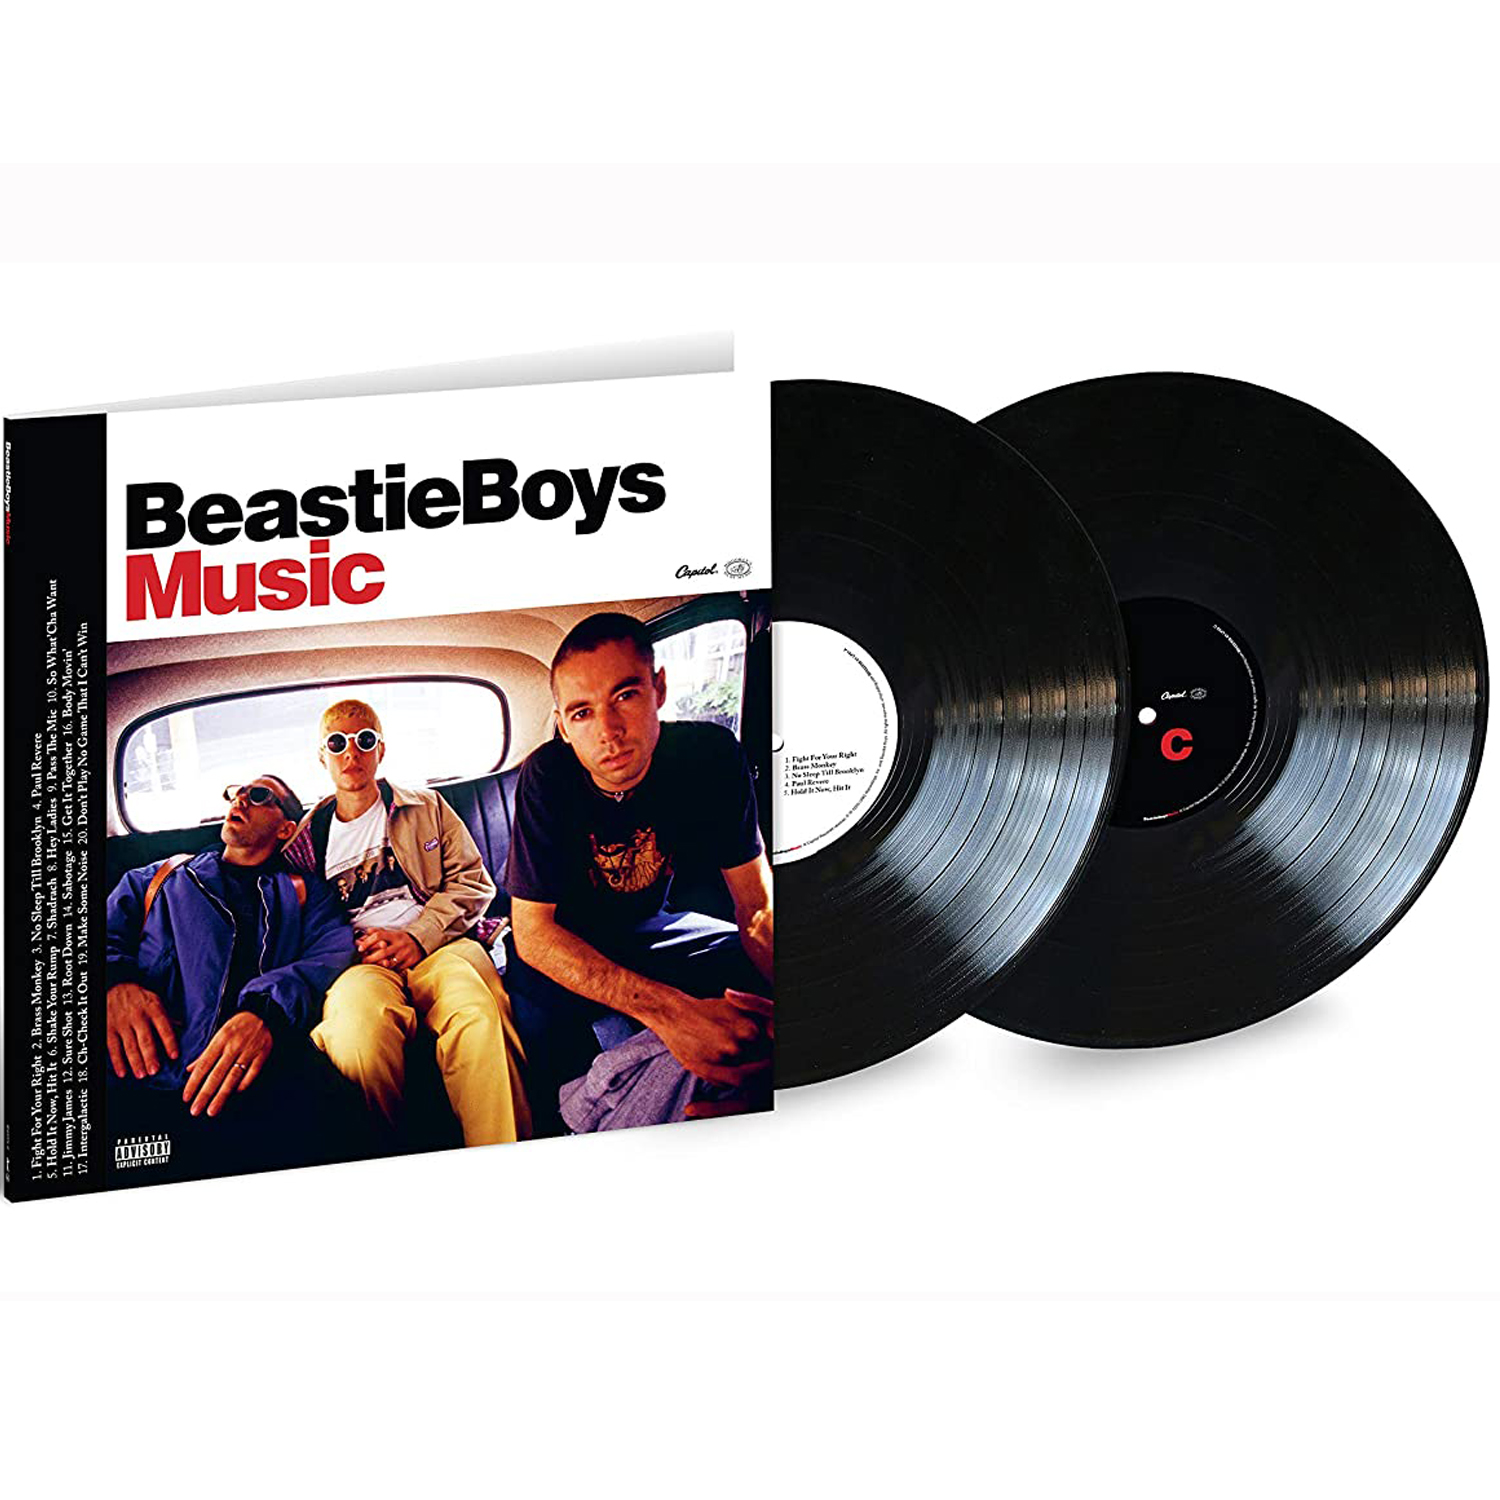 Beastie Boys - Beastie Boys Music - 2 x LP